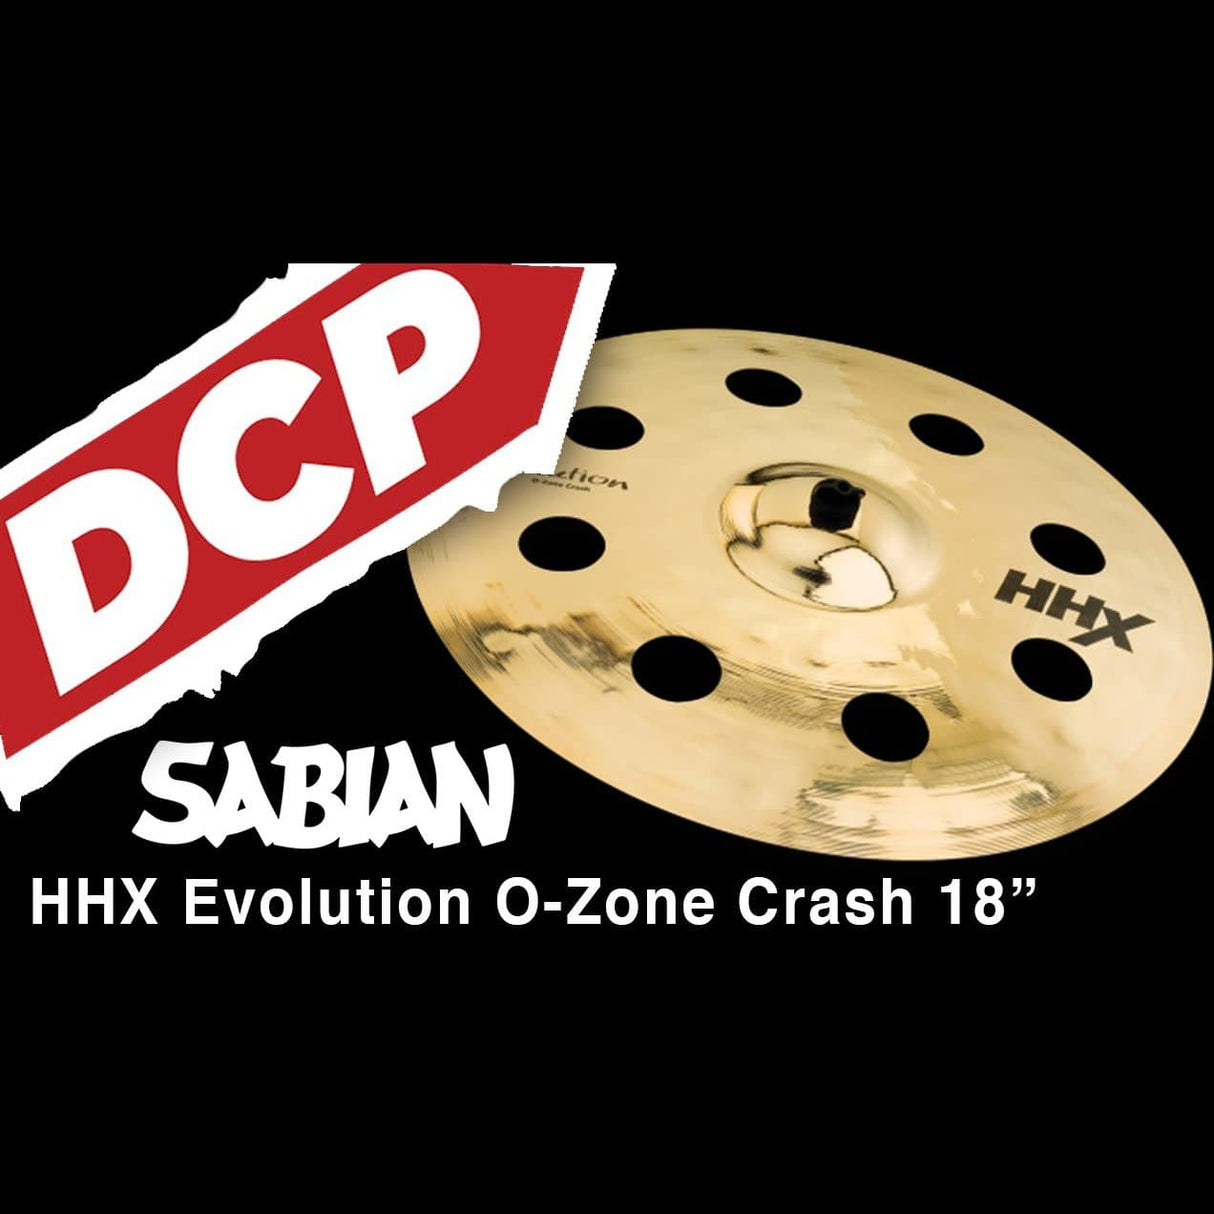 Sabian HHX Evolution O-Zone Crash Cymbal 18" Brilliant